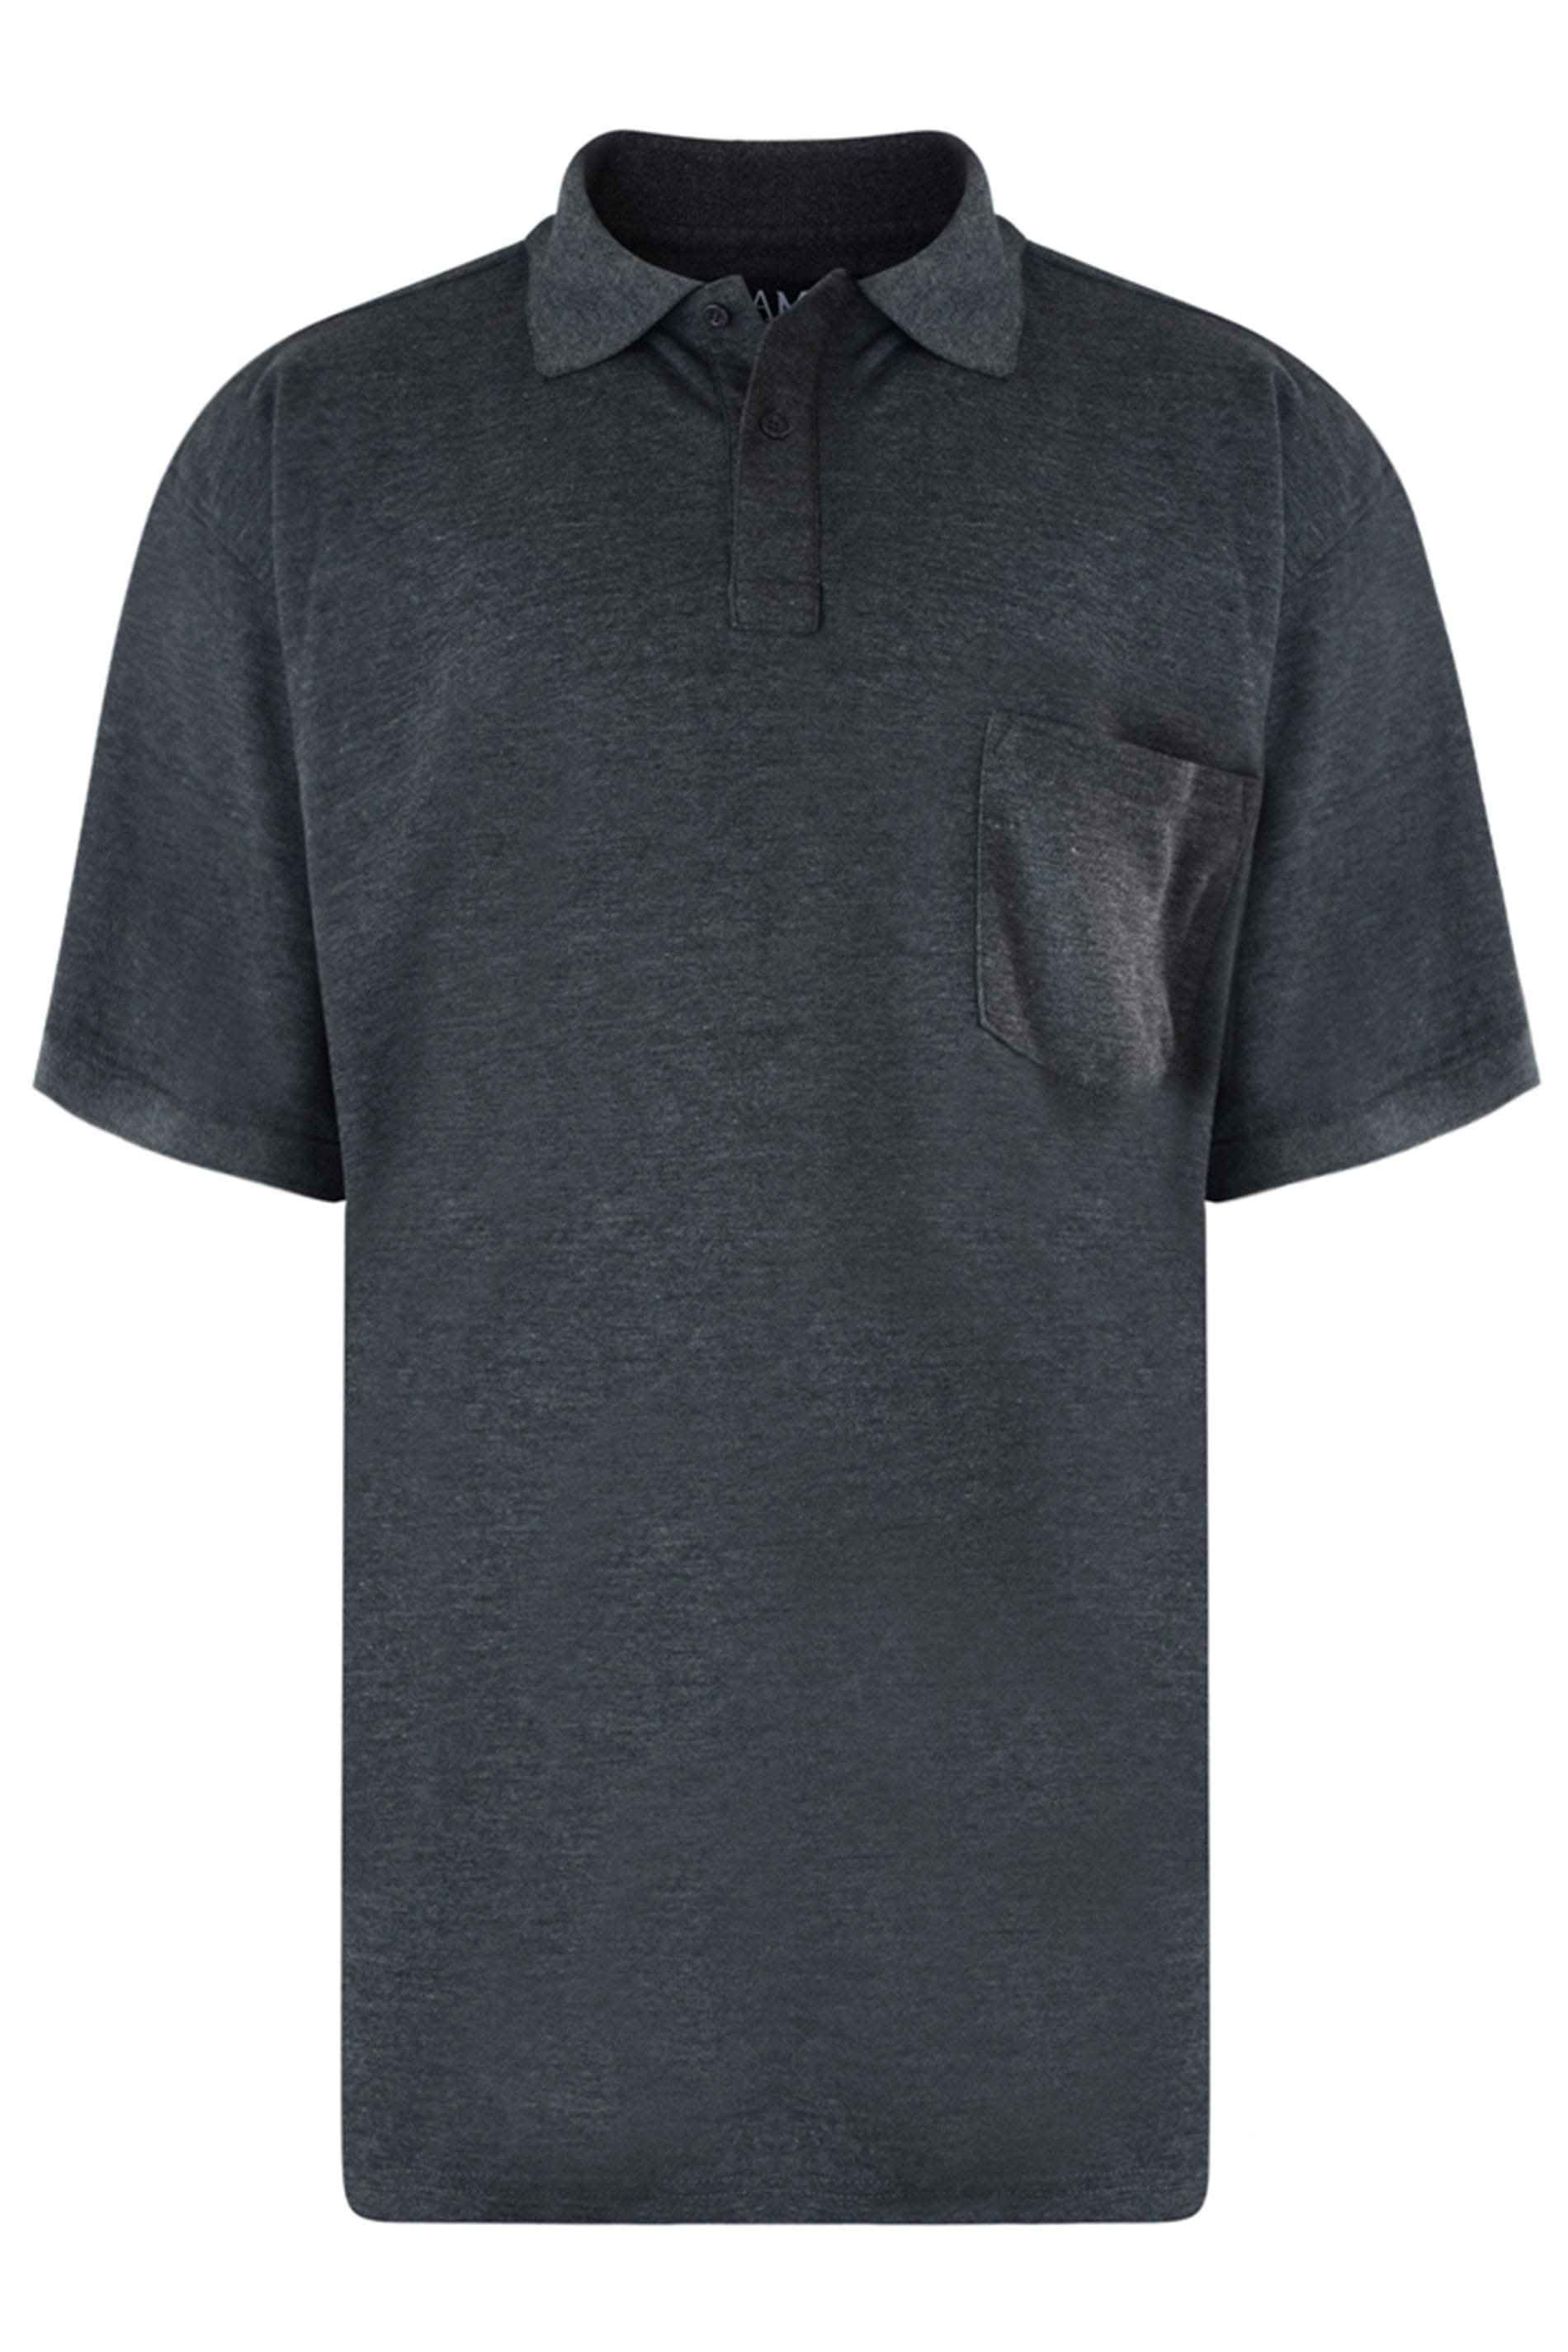 KAM Charcoal Grey Pocket Polo Shirt_d334.jpg